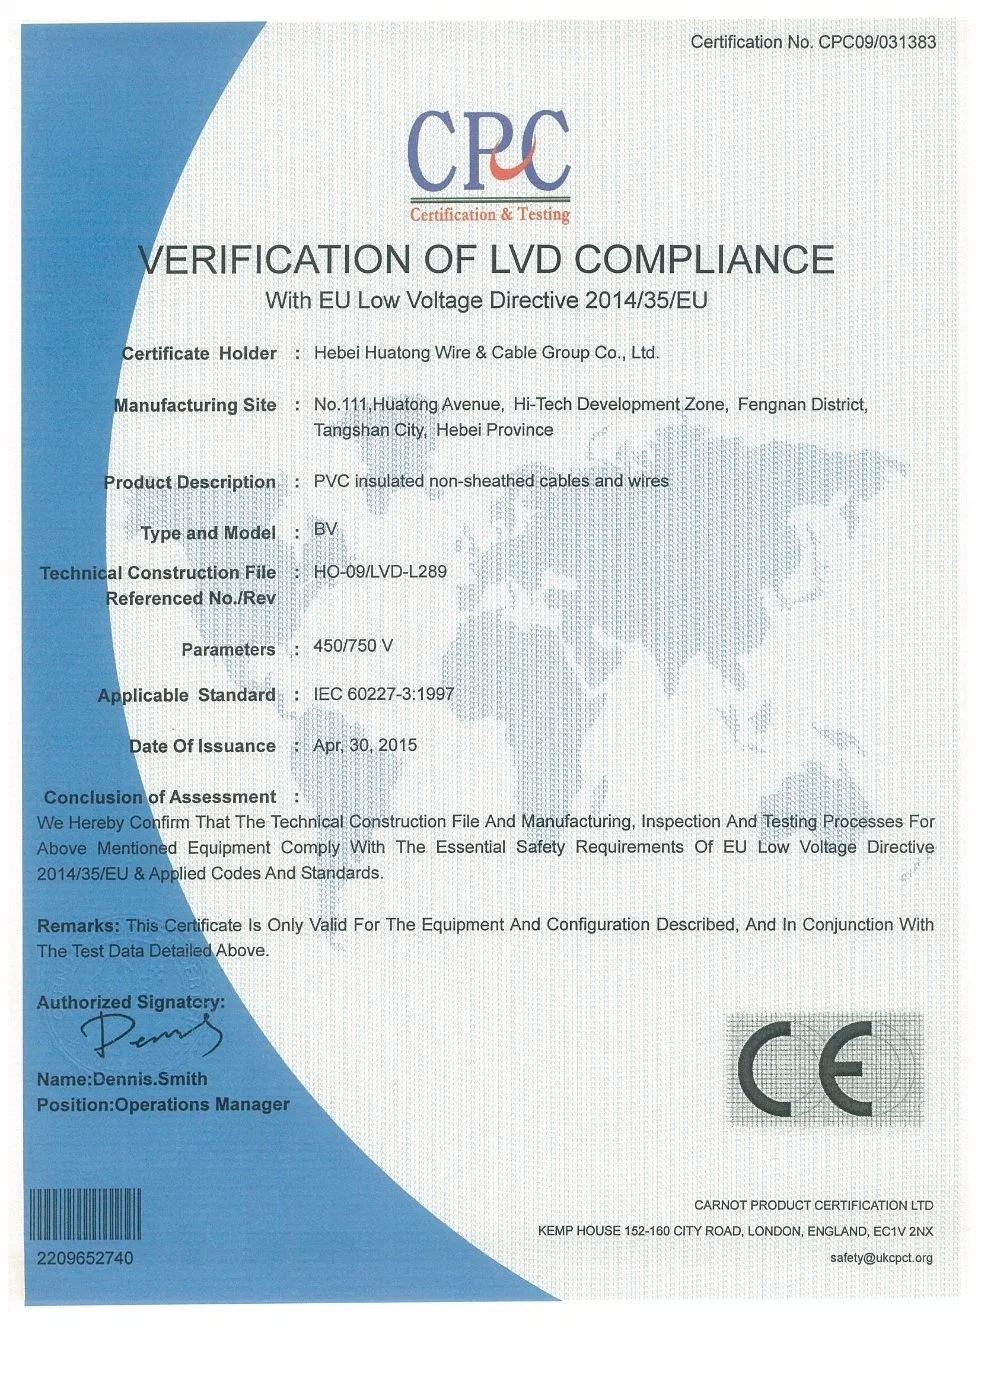 Single Copper Core CCC/GB Type IEC06, IEC08 RV PVC Insulation Flexible Power Cable